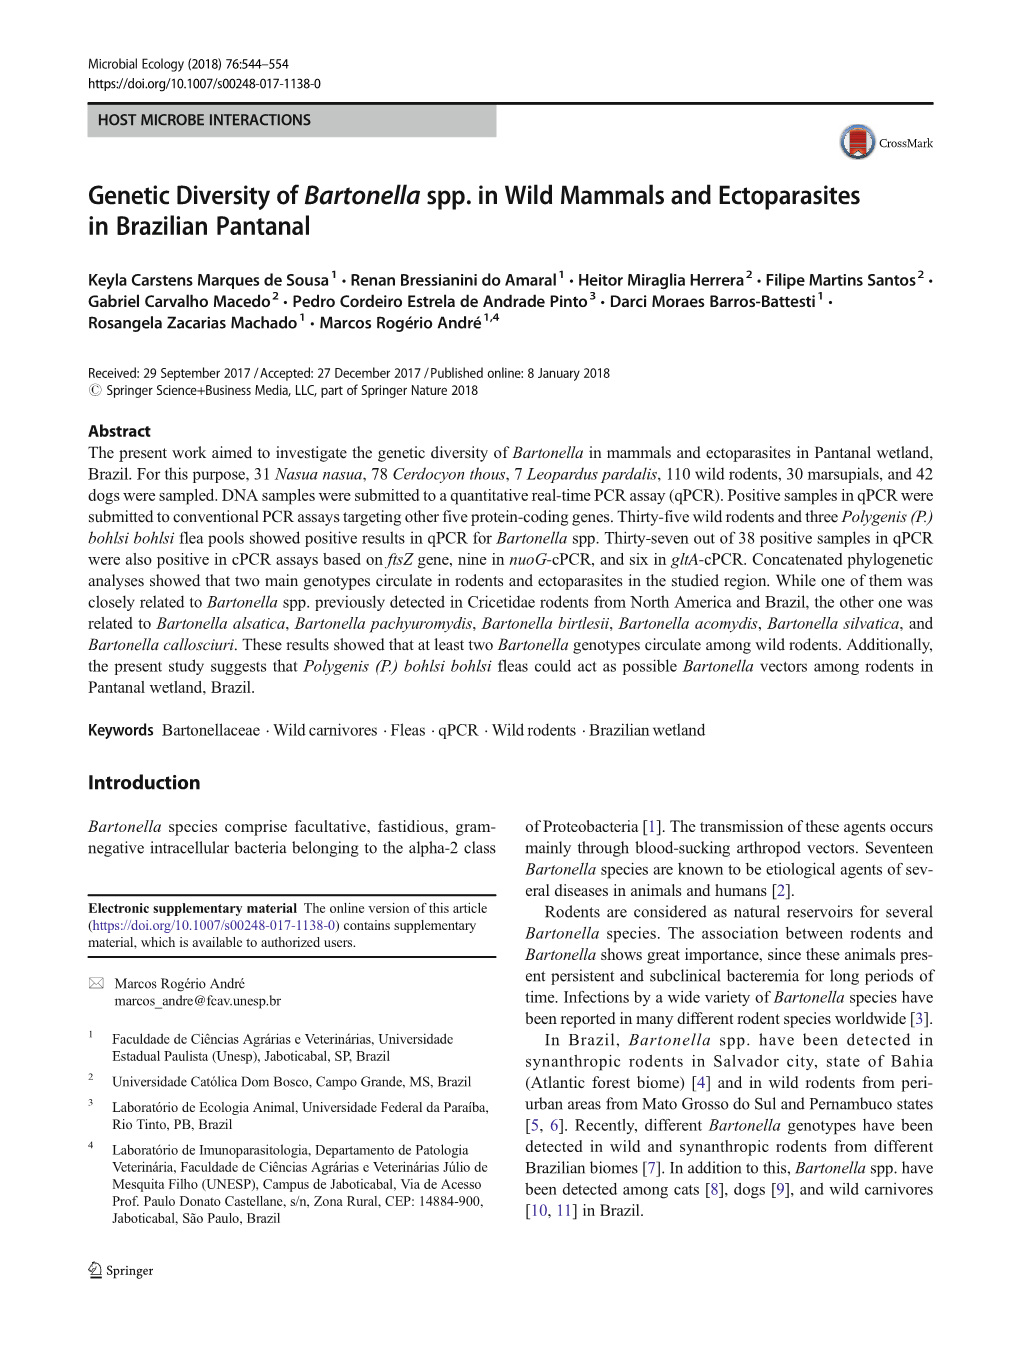 Genetic Diversity of Bartonella Spp. in Wild Mammals and Ectoparasites in Brazilian Pantanal